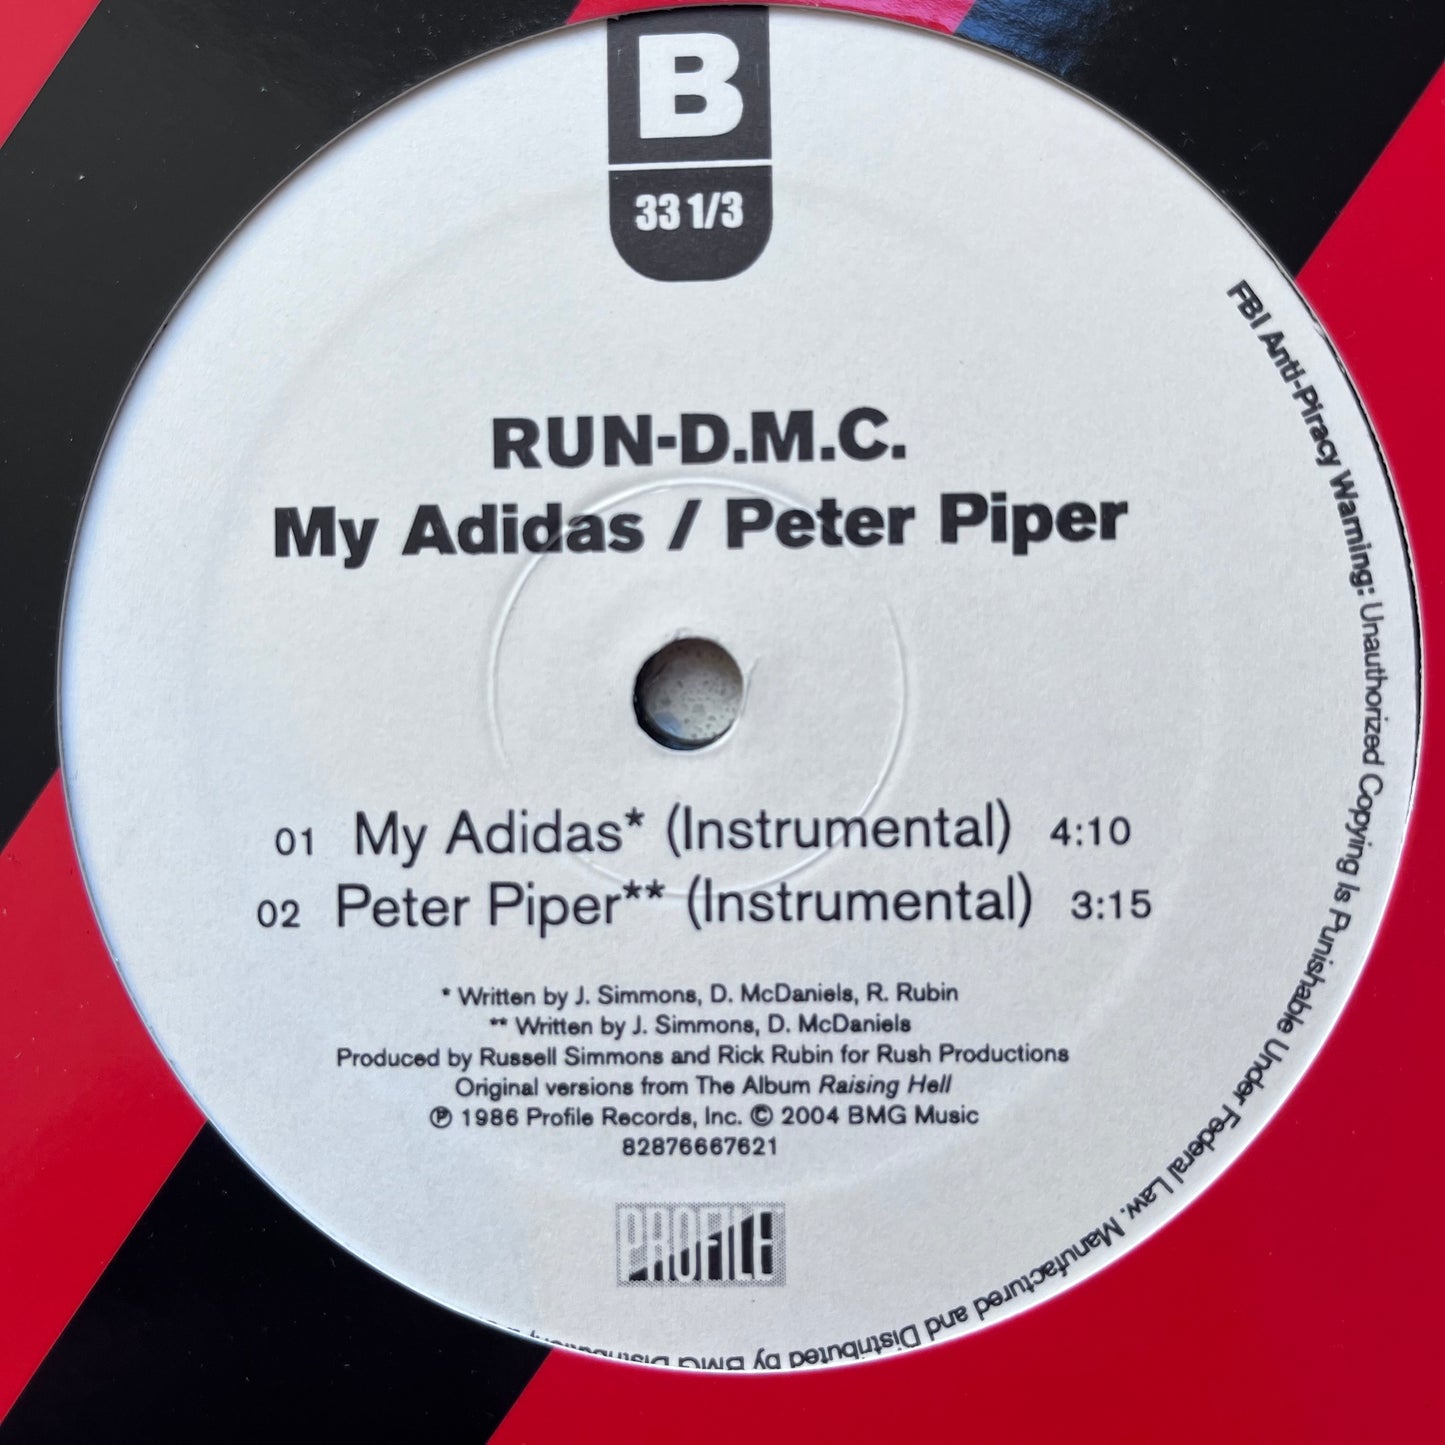 RUN DMC “My Adidas” / “Peter Piper” 4 Version 12inch Vinyl Record Includes Original and Instrumentals